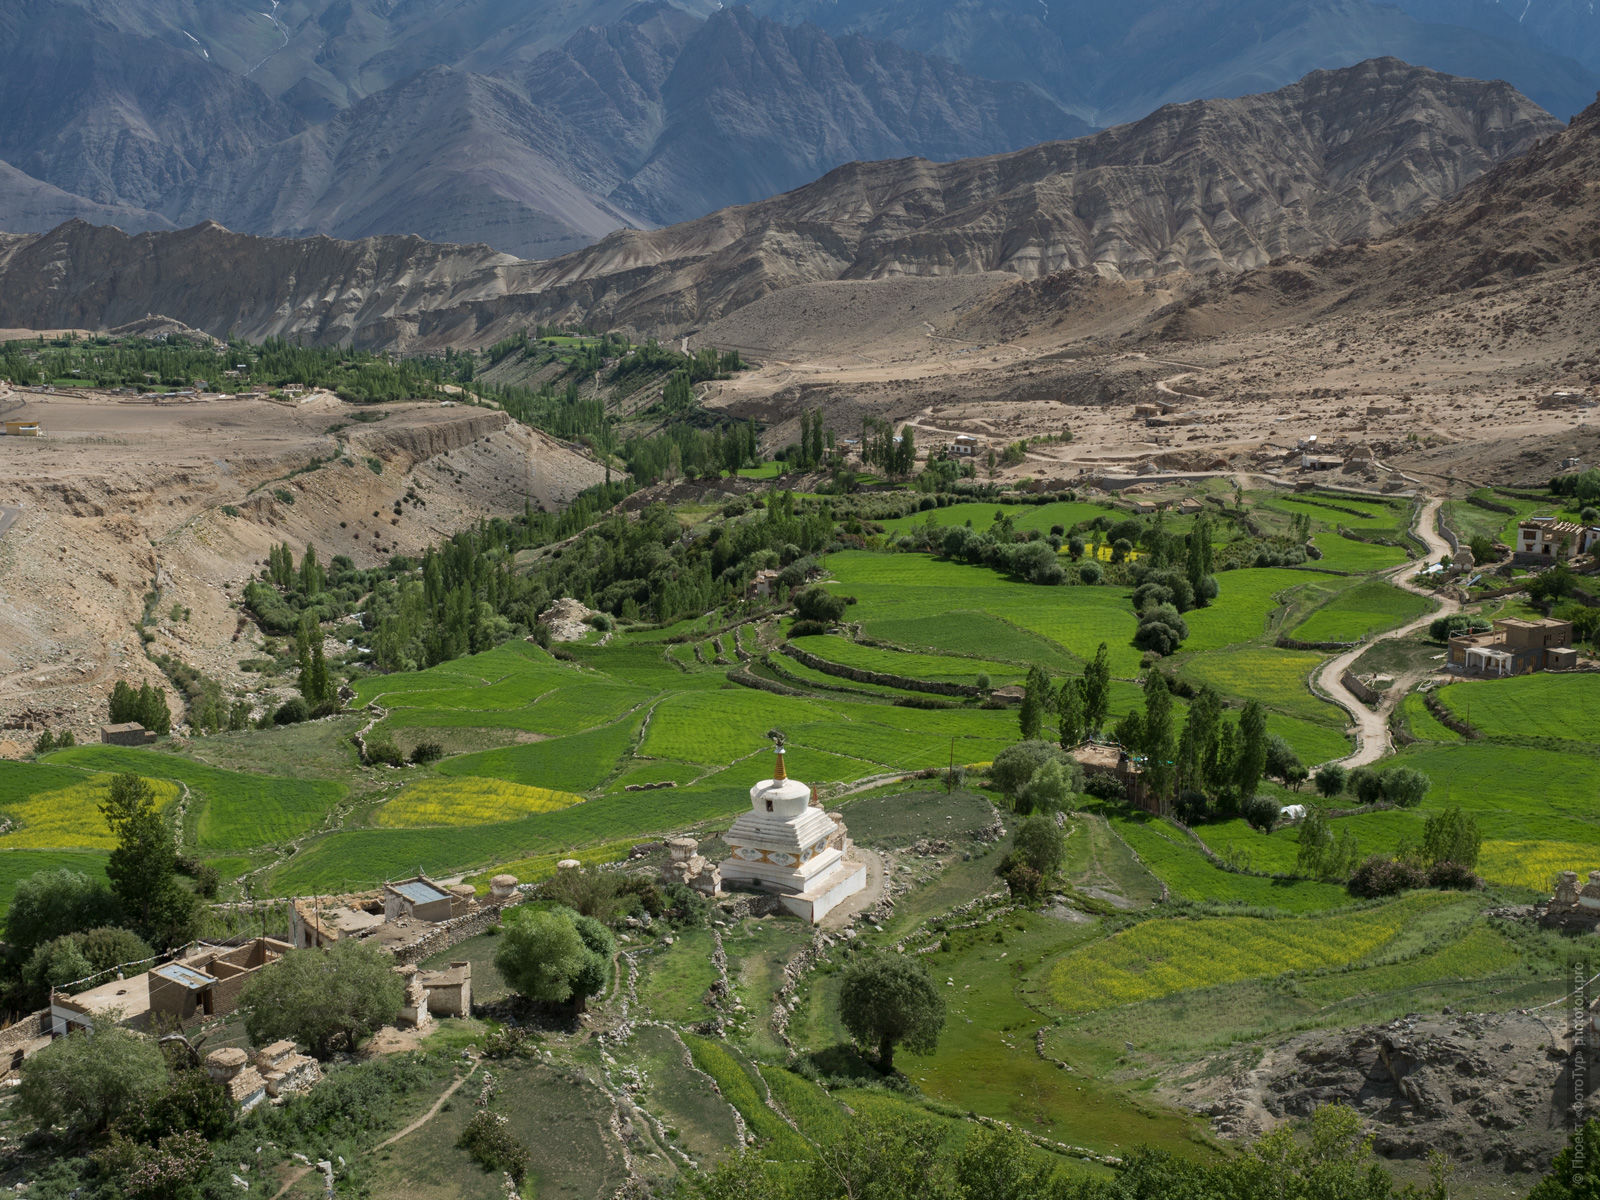 Hemis Shukpachans mountain village, Ladakh women’s tour, August 31 - September 14, 2019.